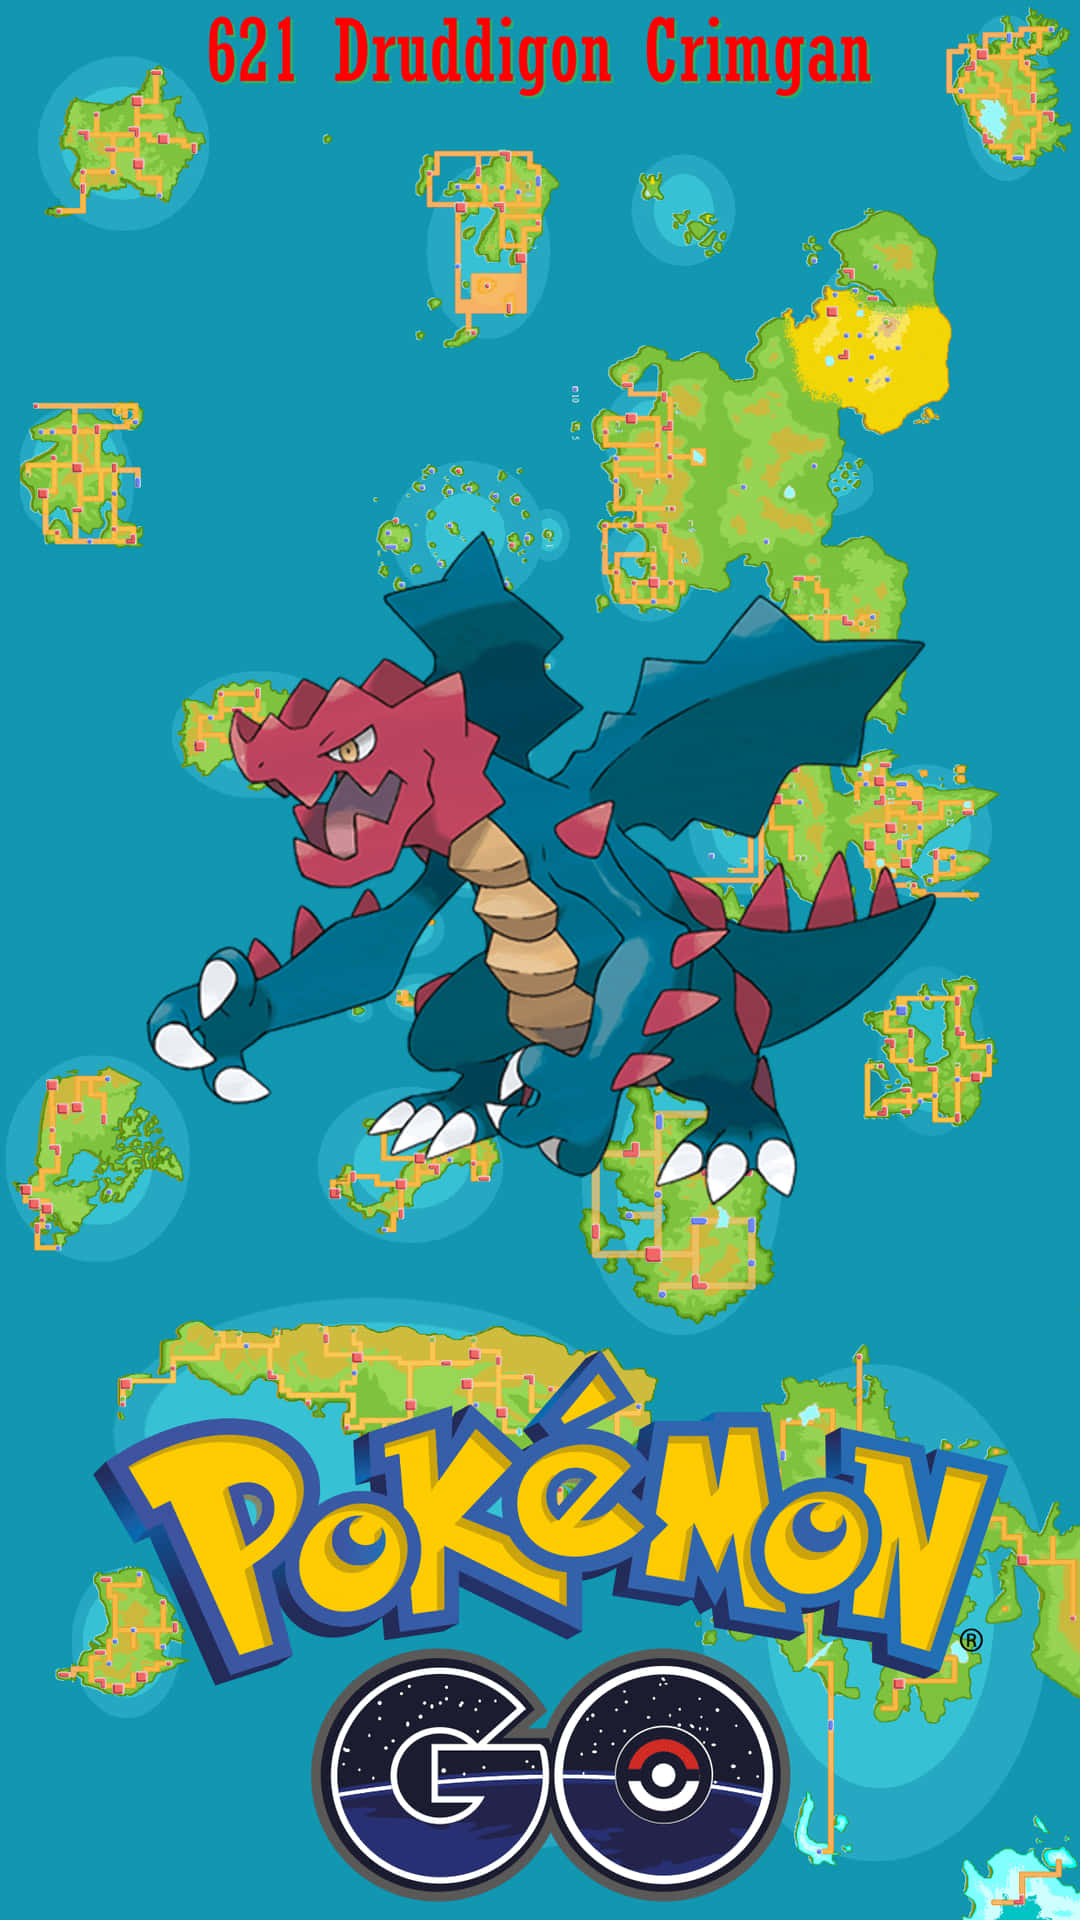 Pokemon Go Druddigon Promotional Artwork Wallpaper